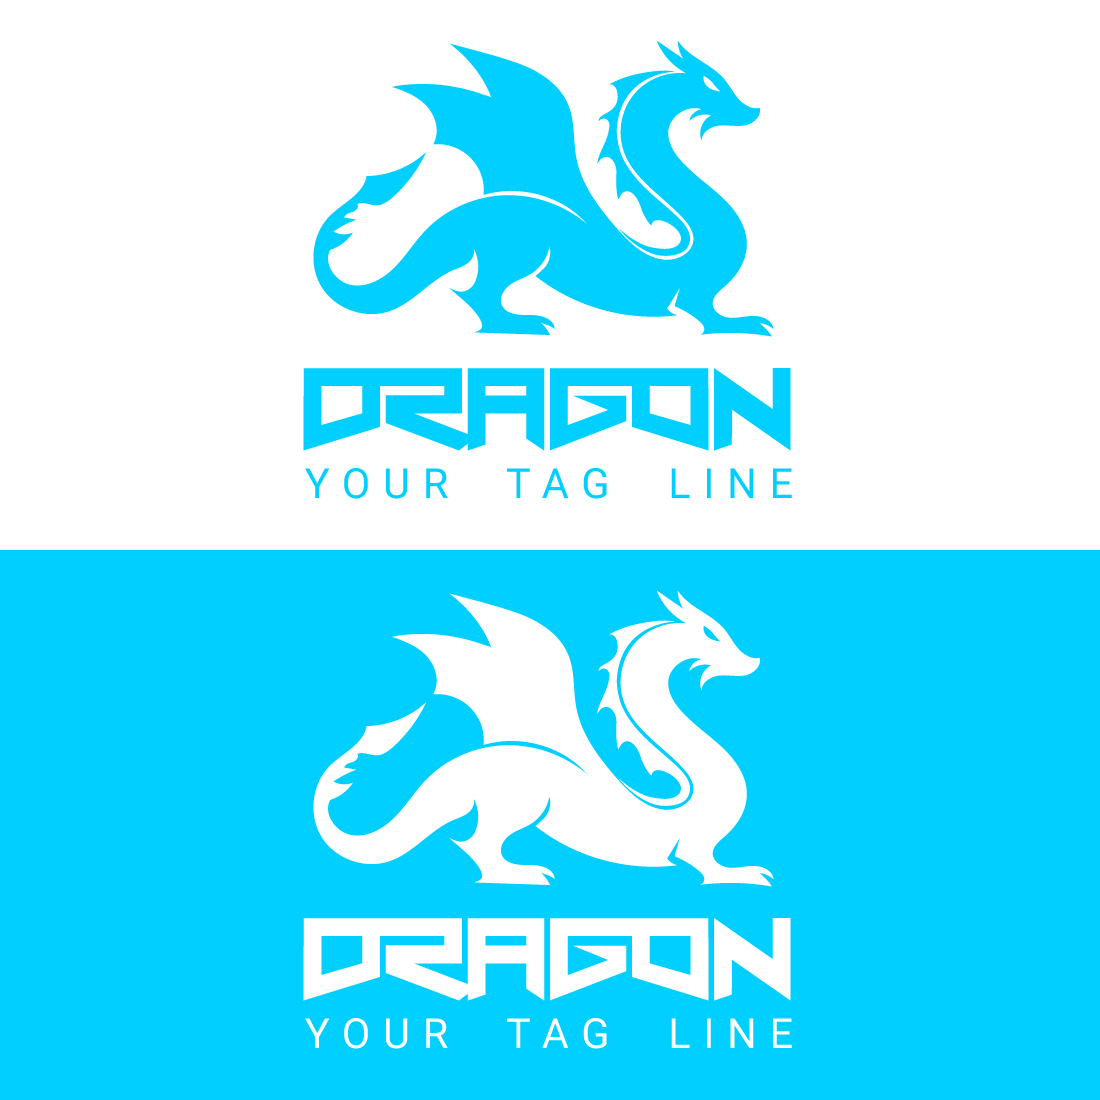 Flat design dragon colorful logo cover image.